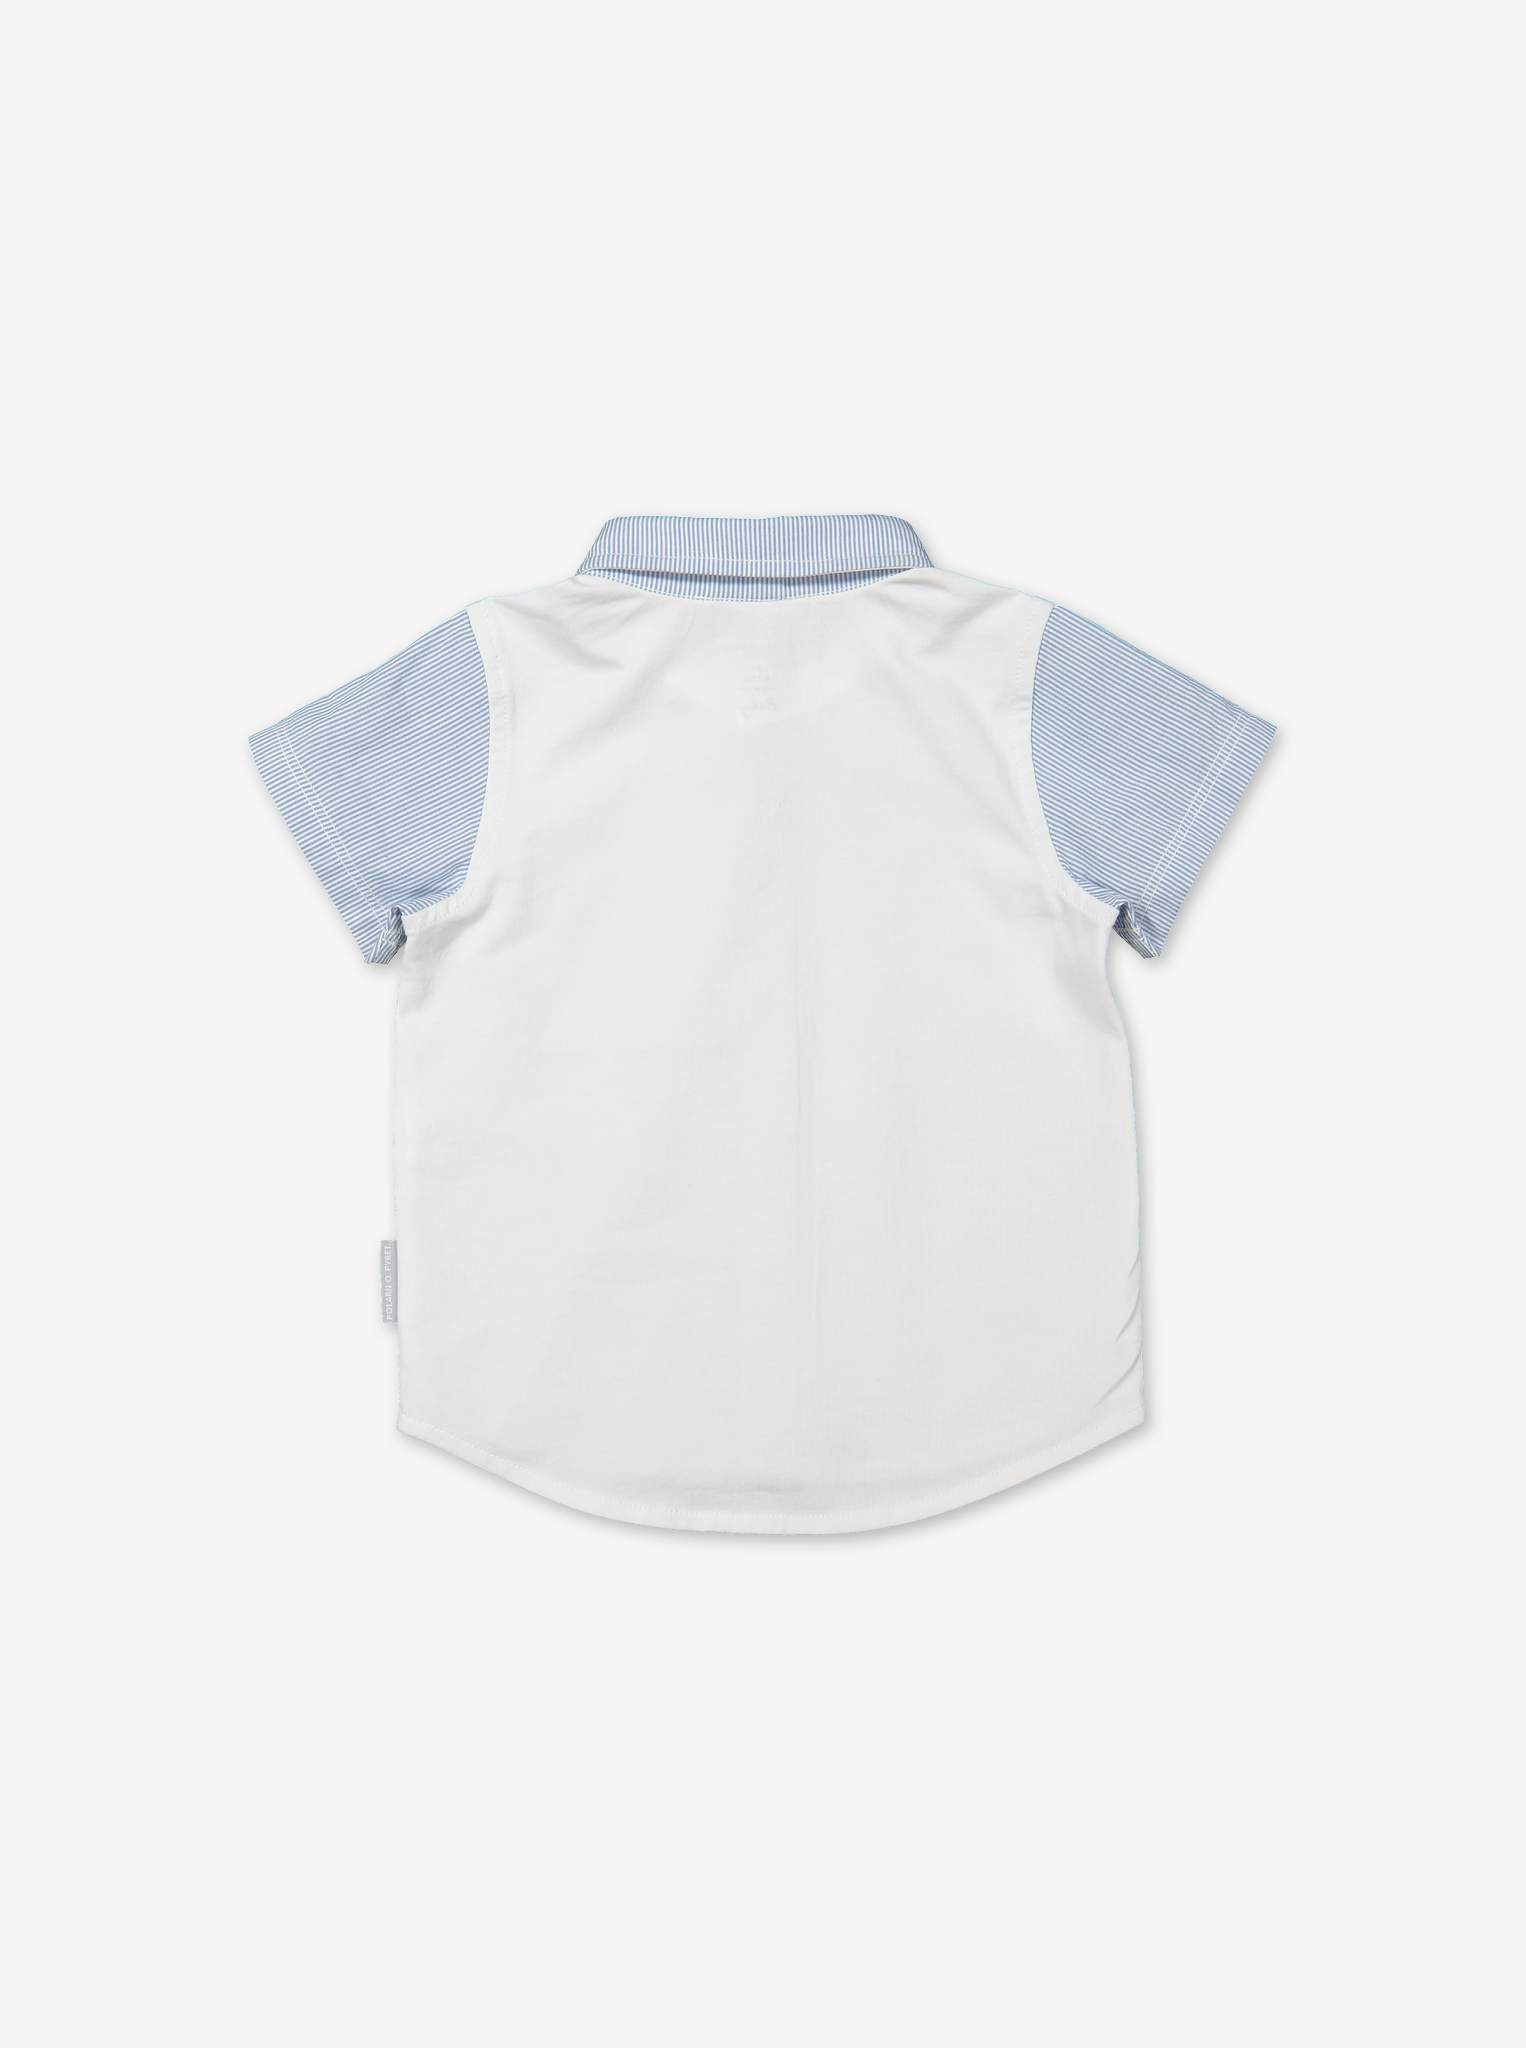 Stripe polo shirt for baby-Boy-6-12y-White